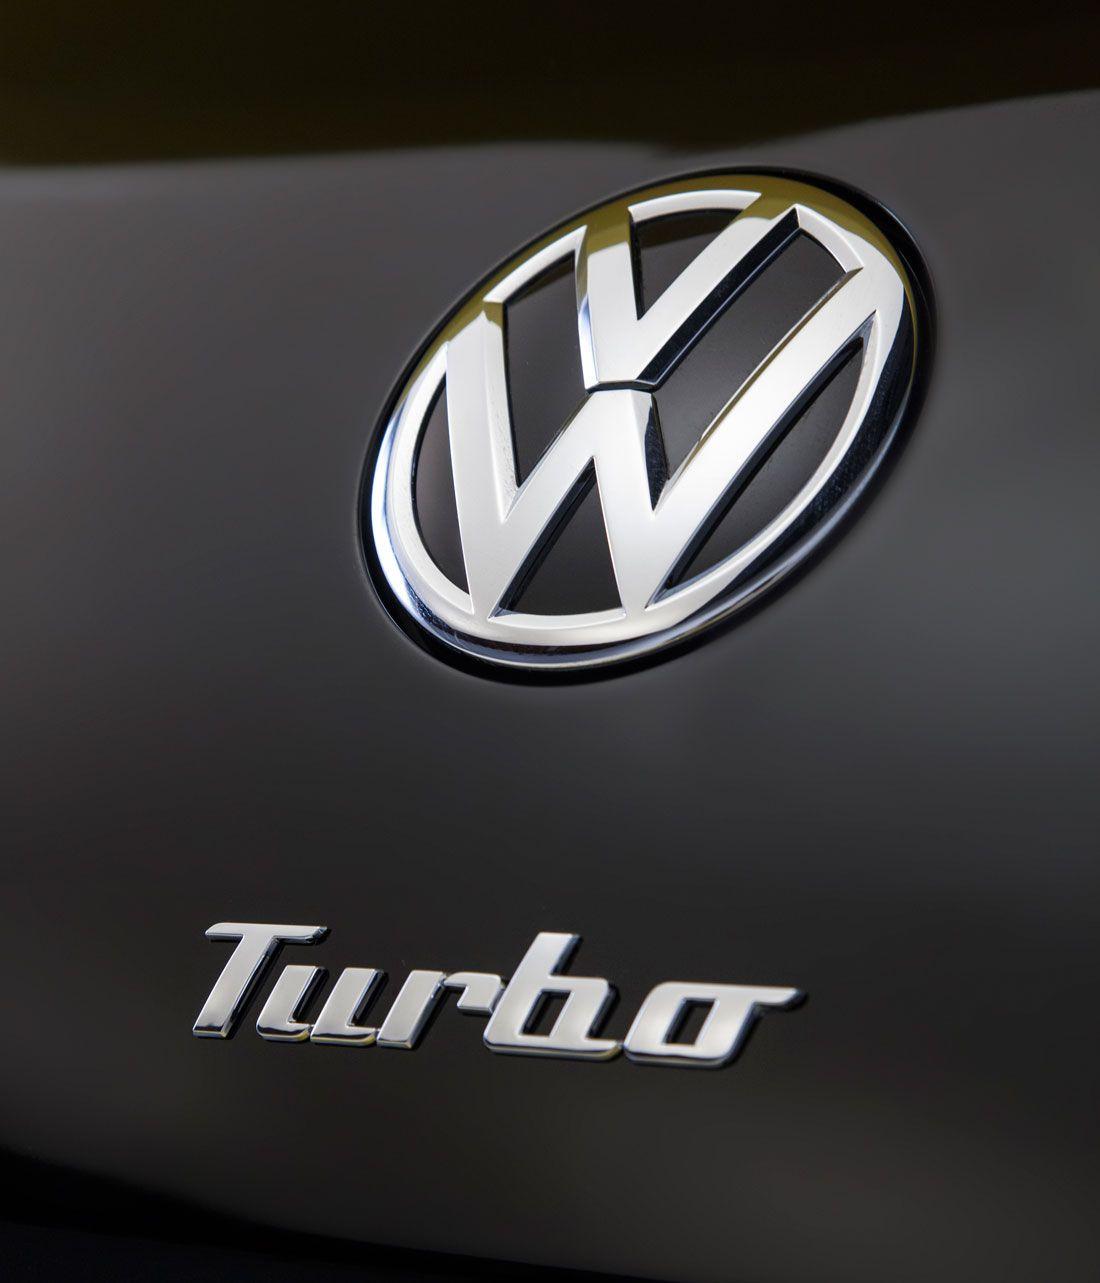 VW Turbo Logo - Volkswagen related emblems